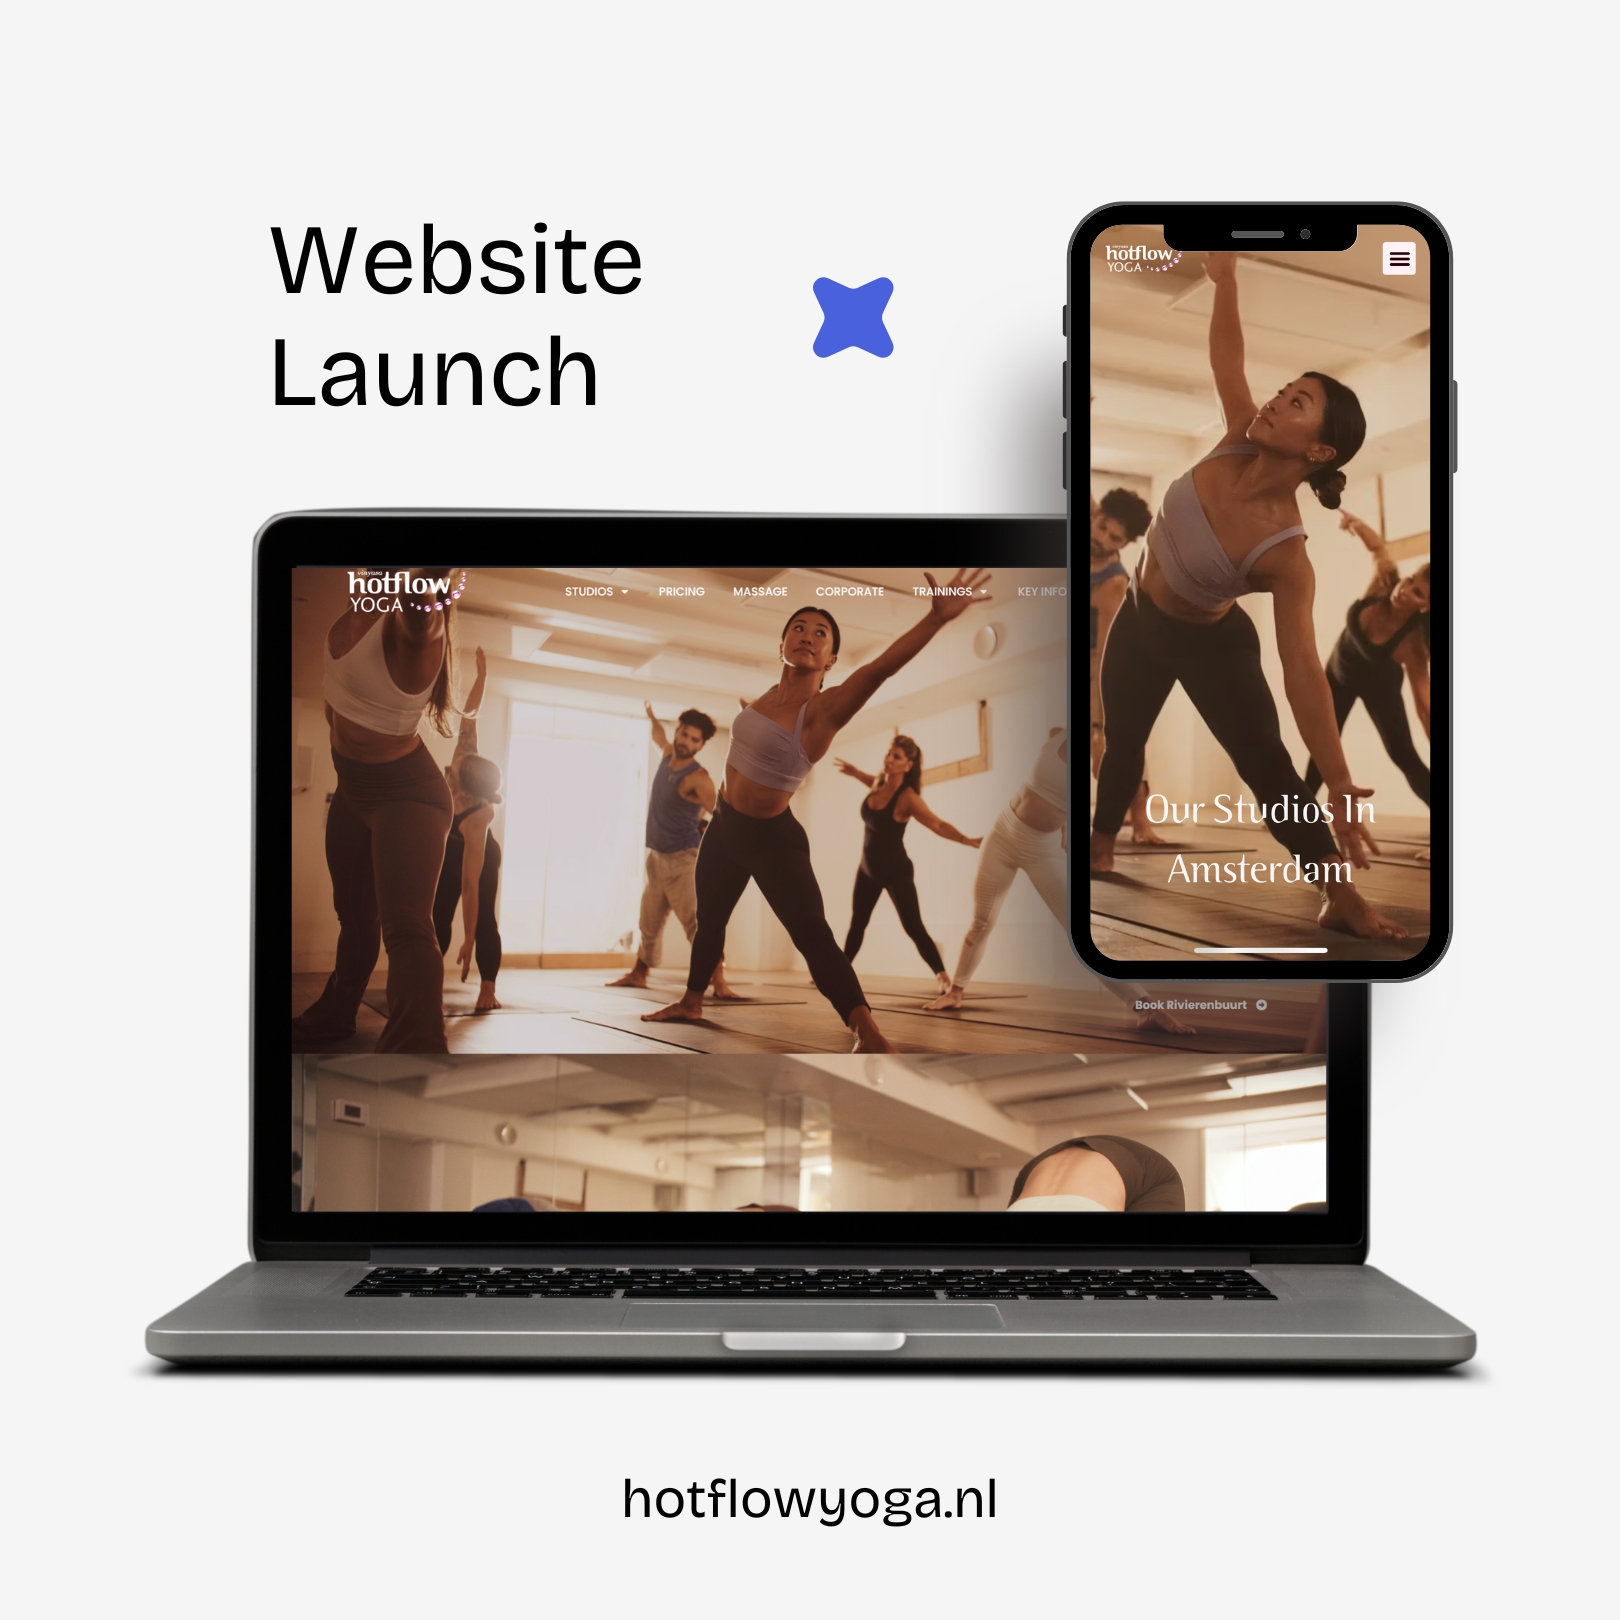 Hot Flow Yoga website mock up on mobile and laptop